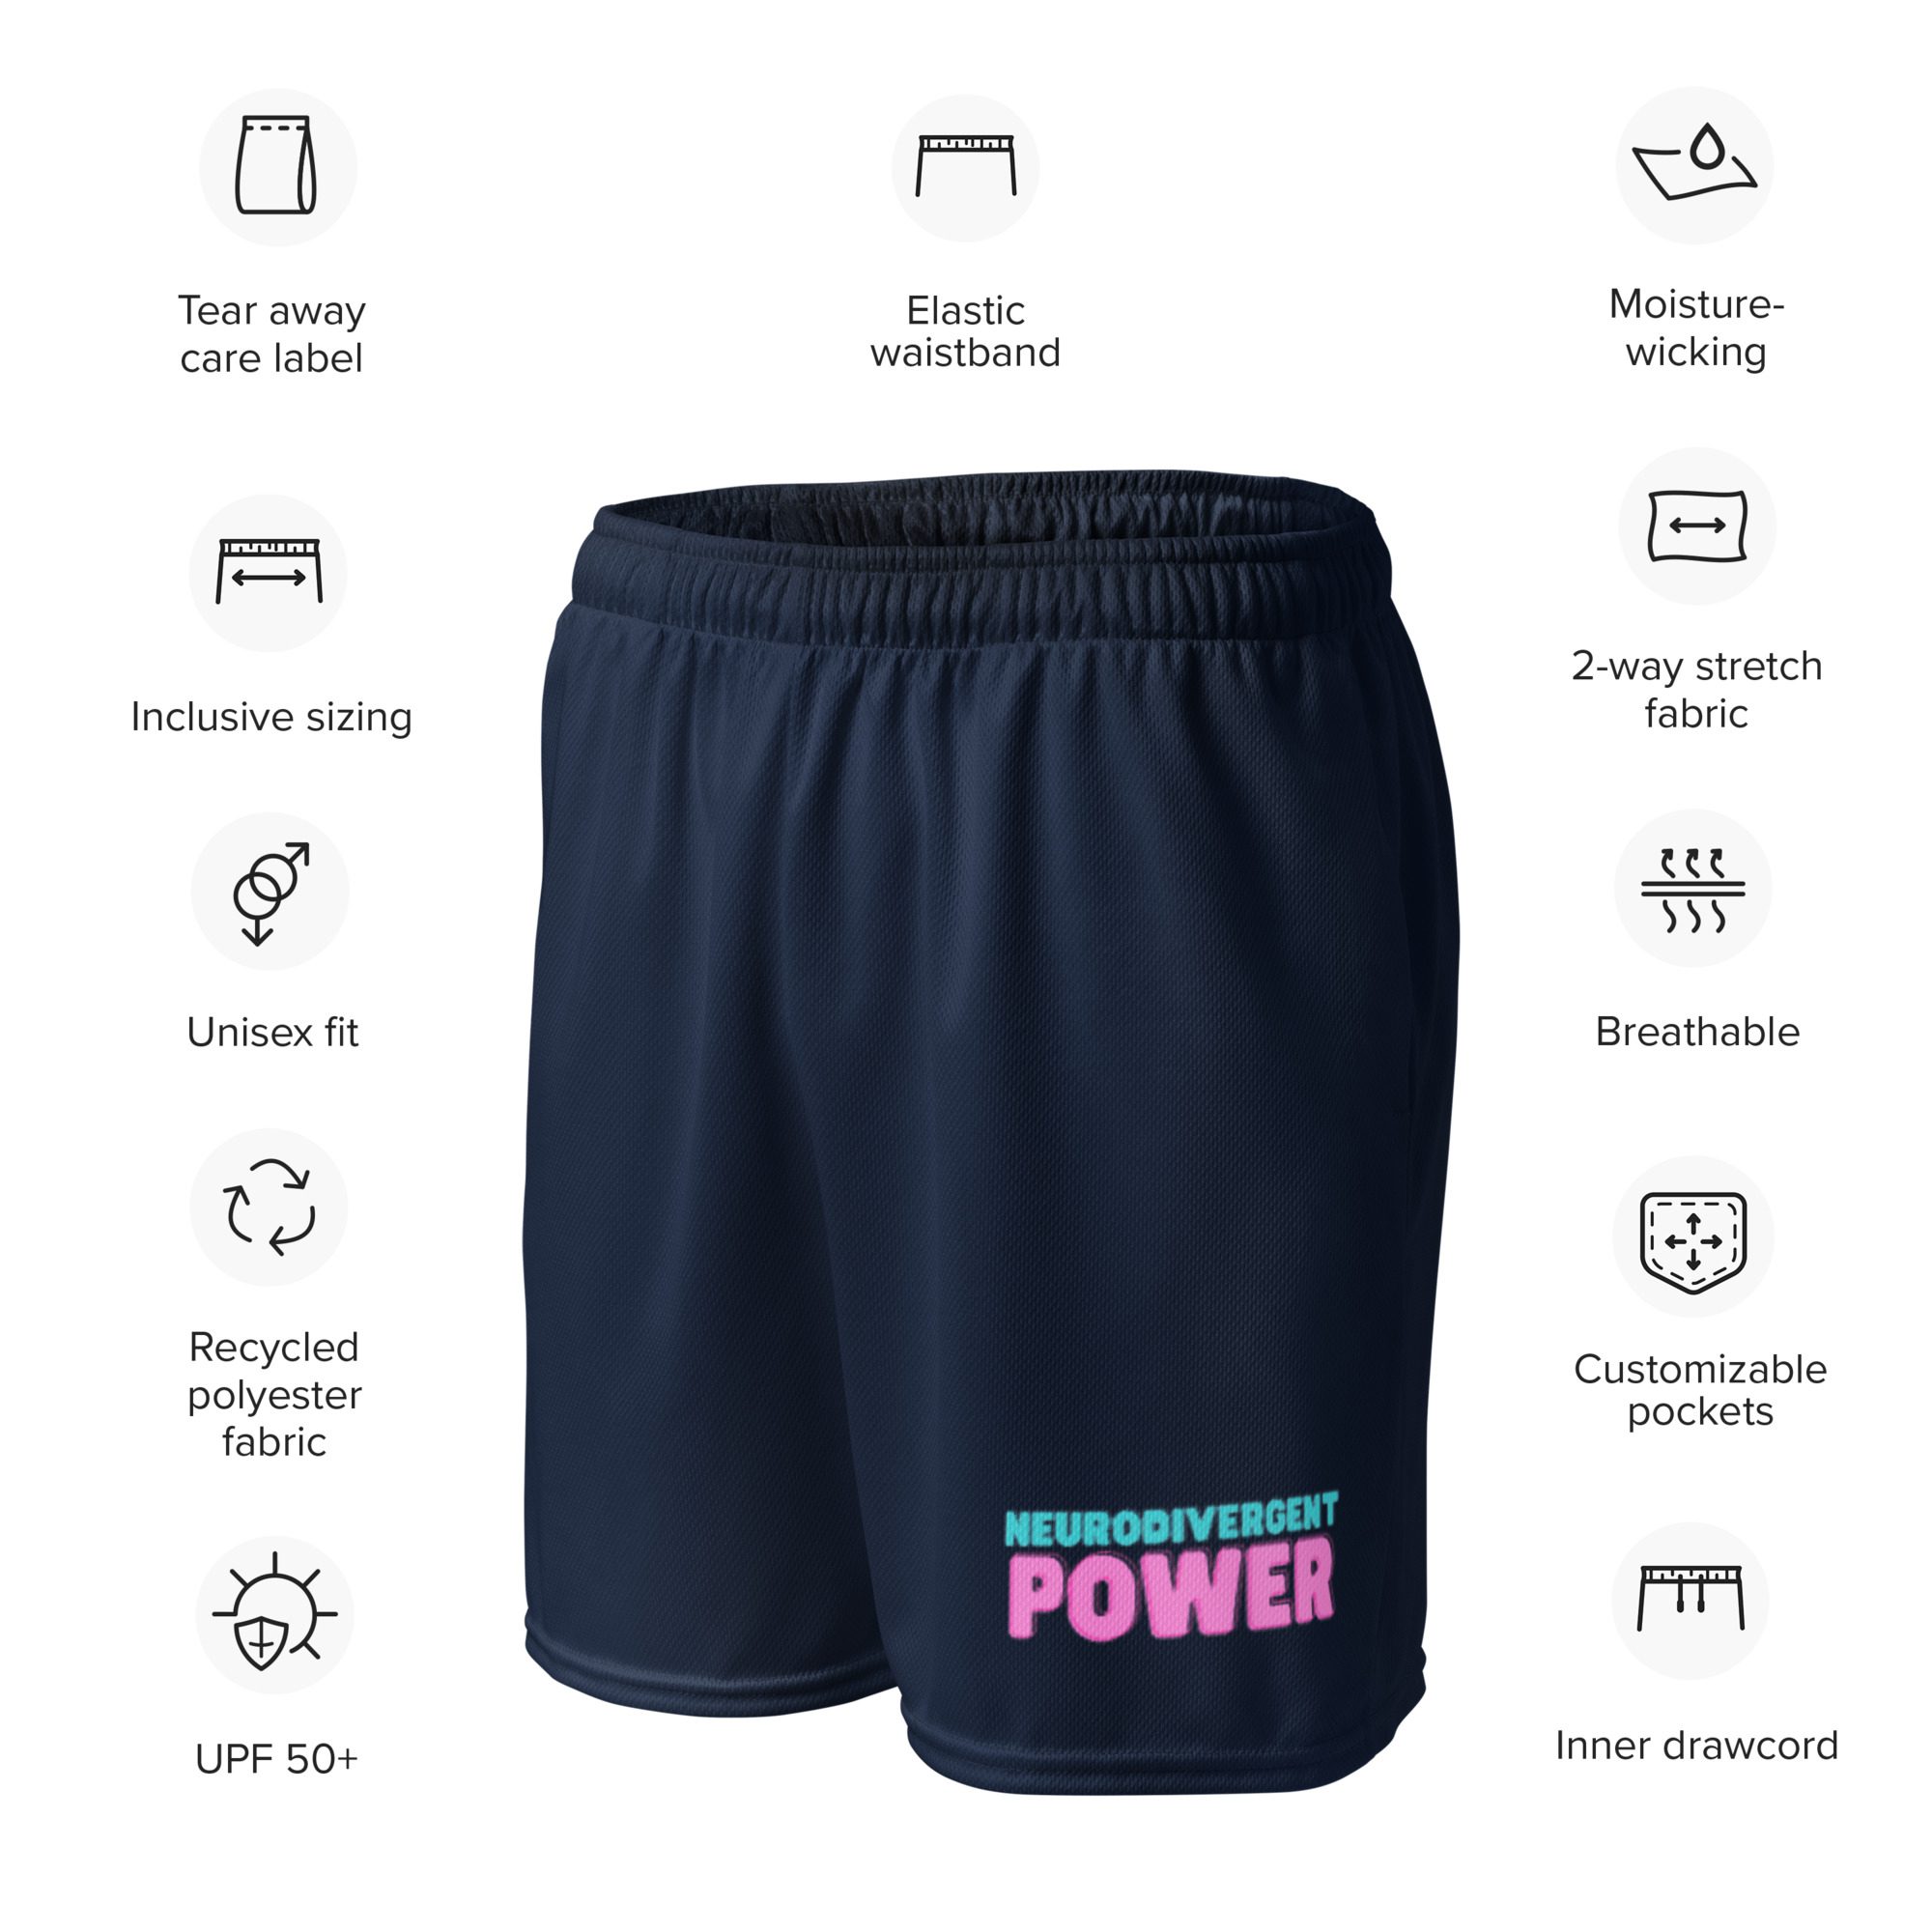 Neurodivergent Power Unisex Mesh Shorts